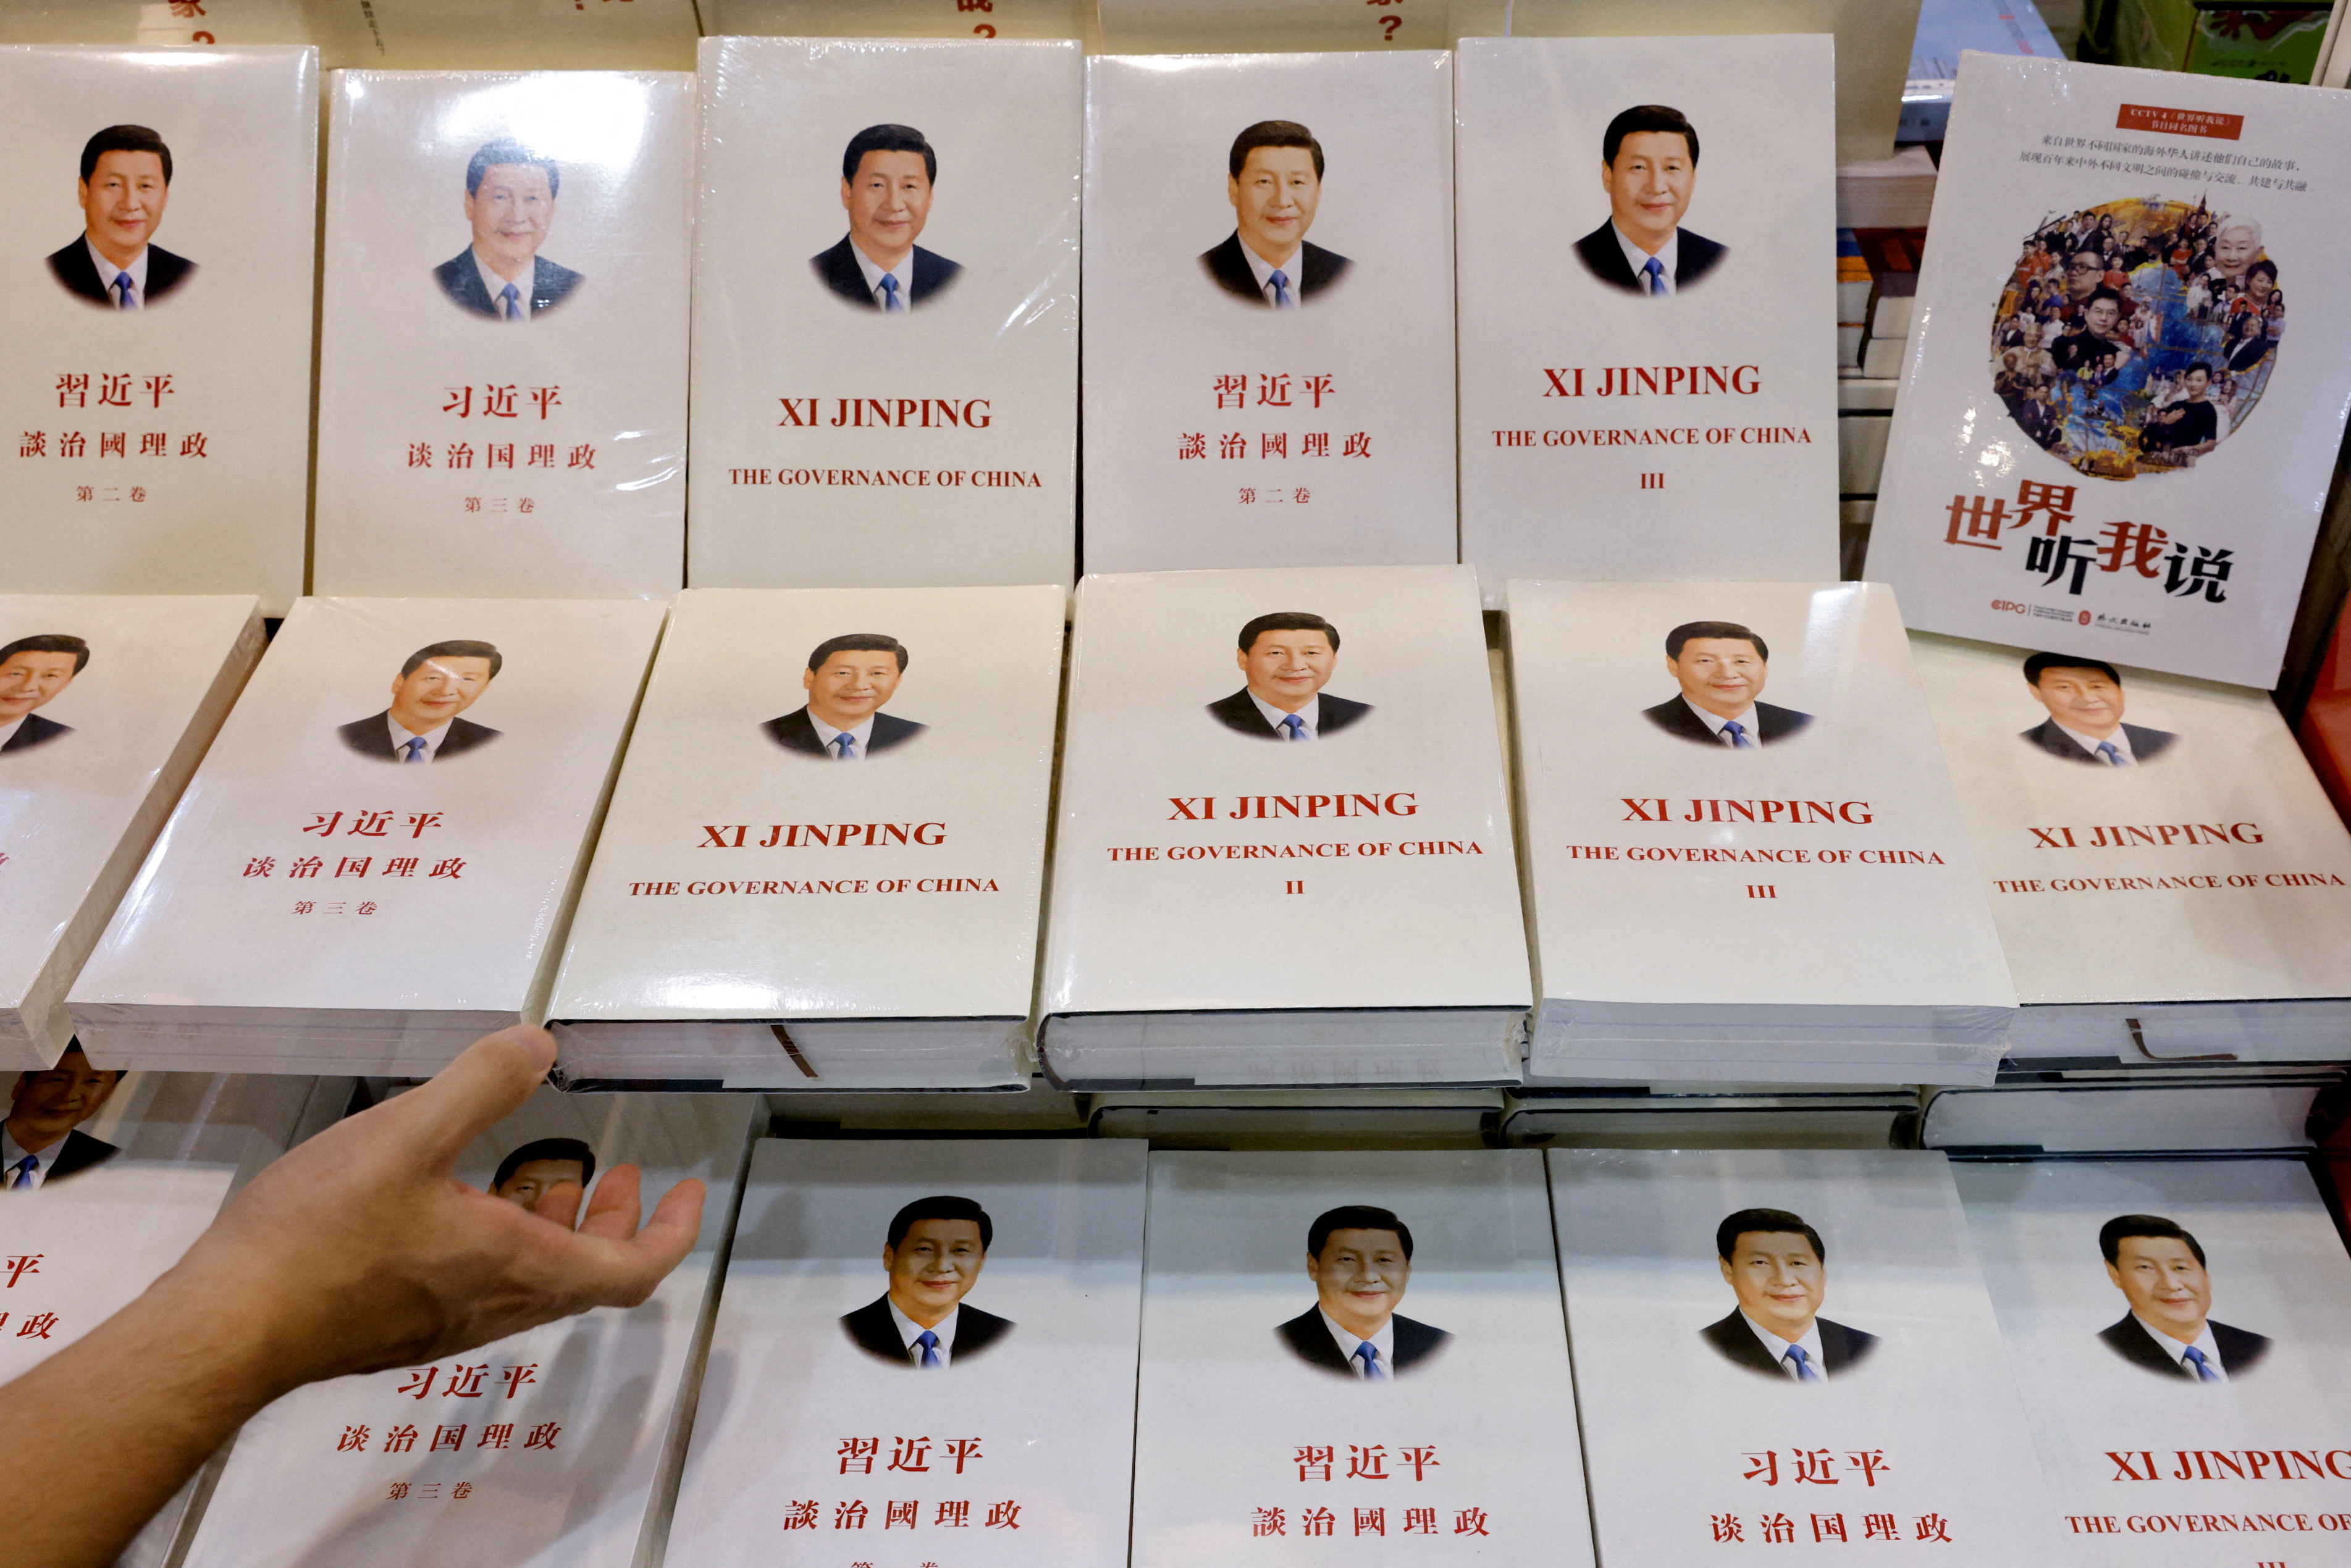 Copies of the book "Xi Jinping: The Governance of China" are displayed at the Hong Kong Book Fair, in Hong Kong, China, July 14, 2021. REUTERS/Tyrone Siu/File Photo